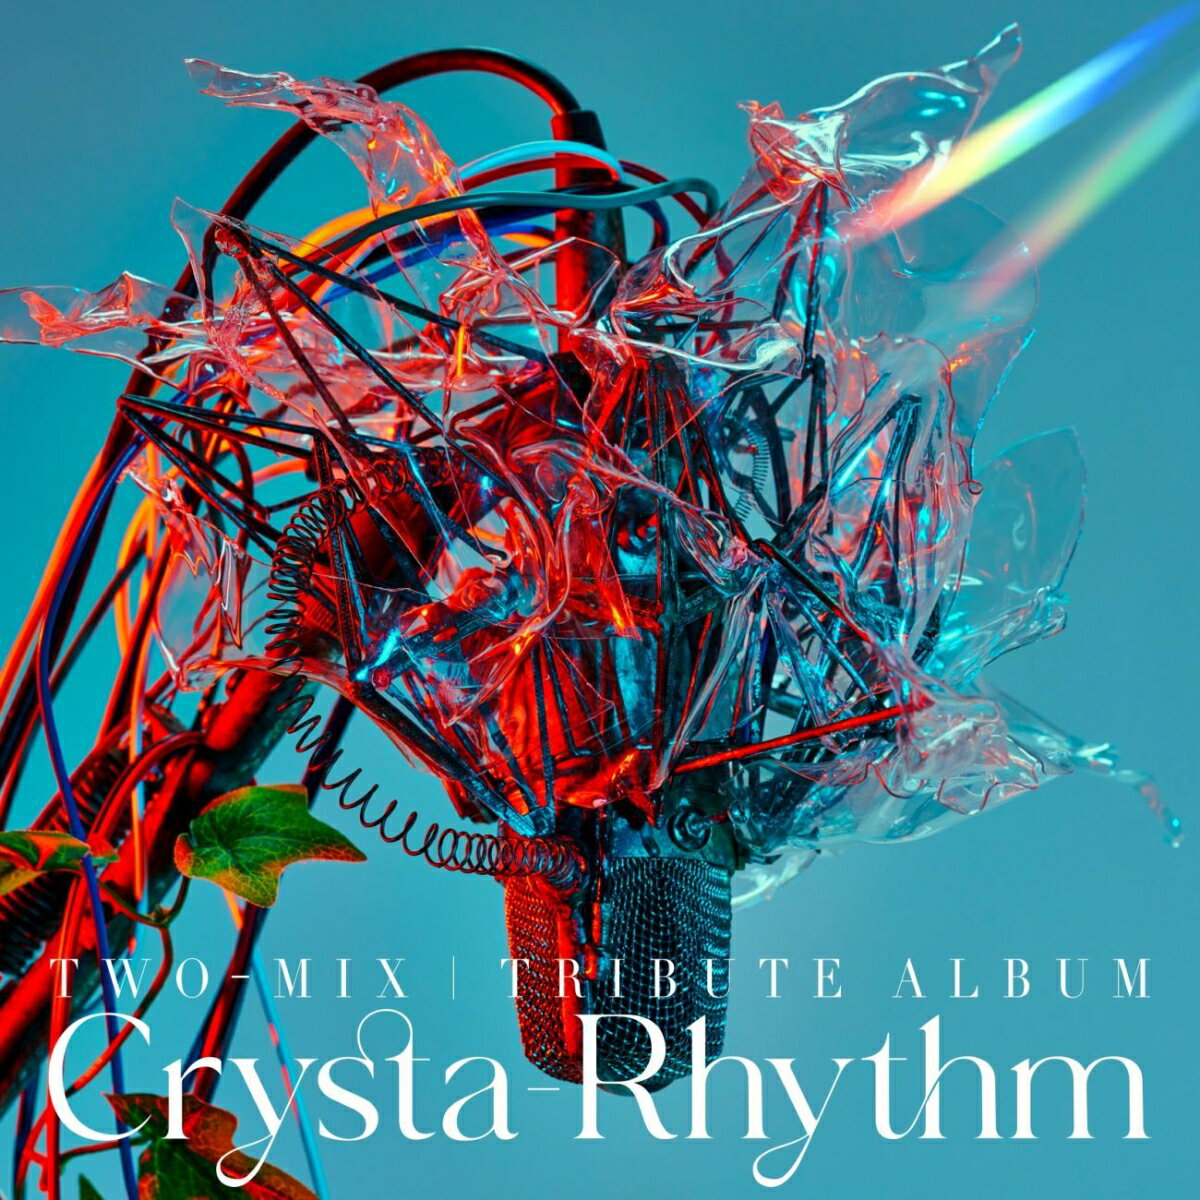 TWO-MIX Tribute Album ”Crysta-Rhythm” [ (V.A.) ]